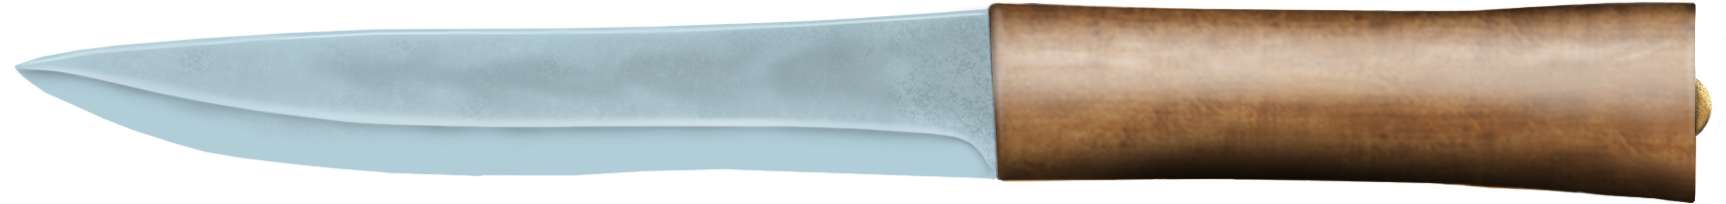 Knife Png Image - Viking Knife Png (1728x316)